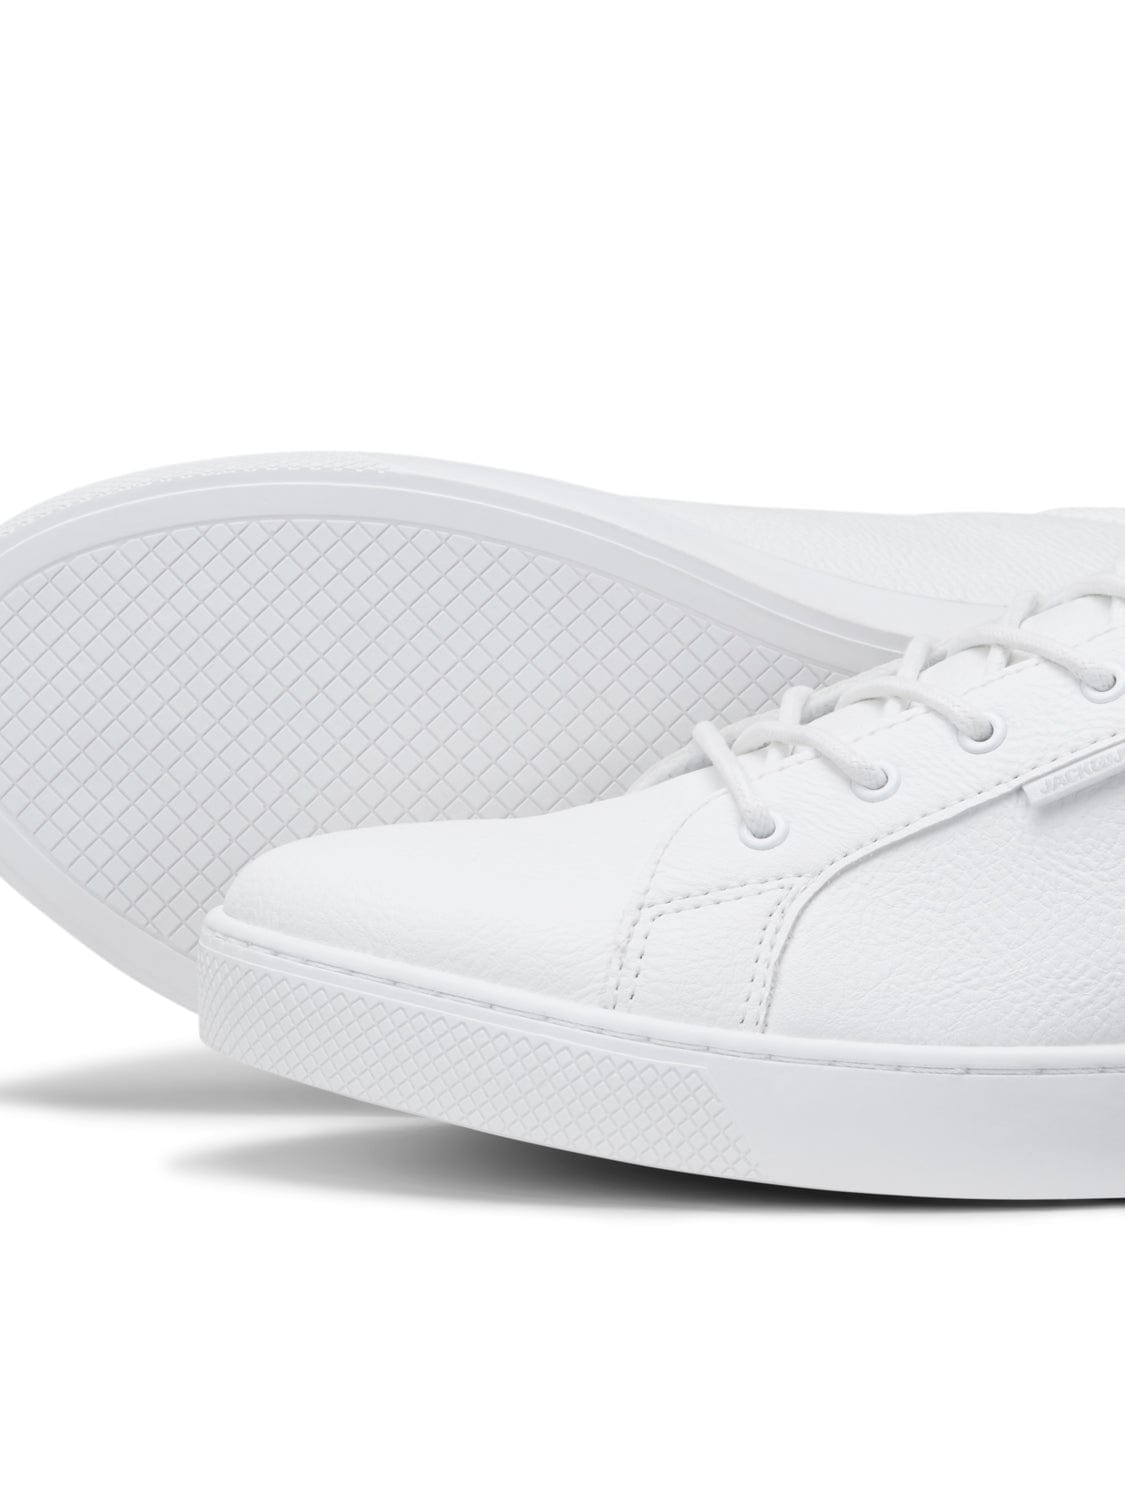 Zapatillas deportivas blancas -JFWTRENT